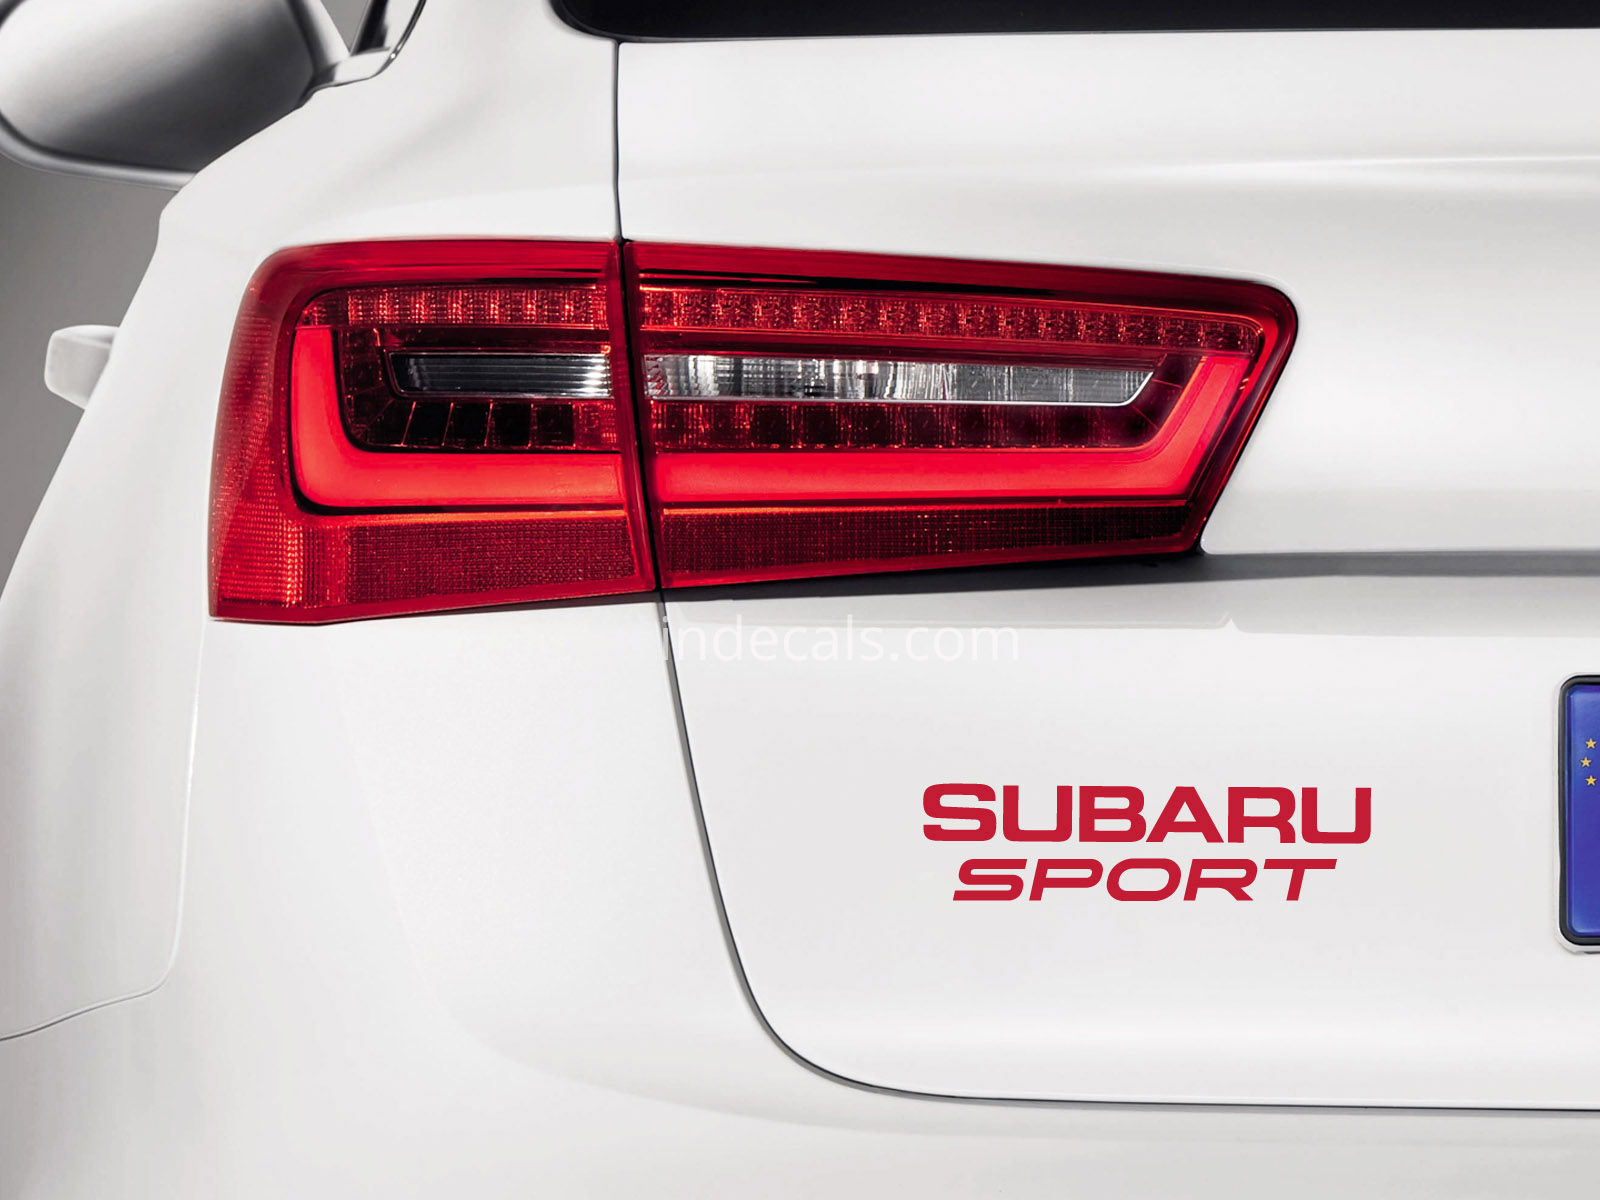 1 x Subaru Sports Sticker for Trunk - Red